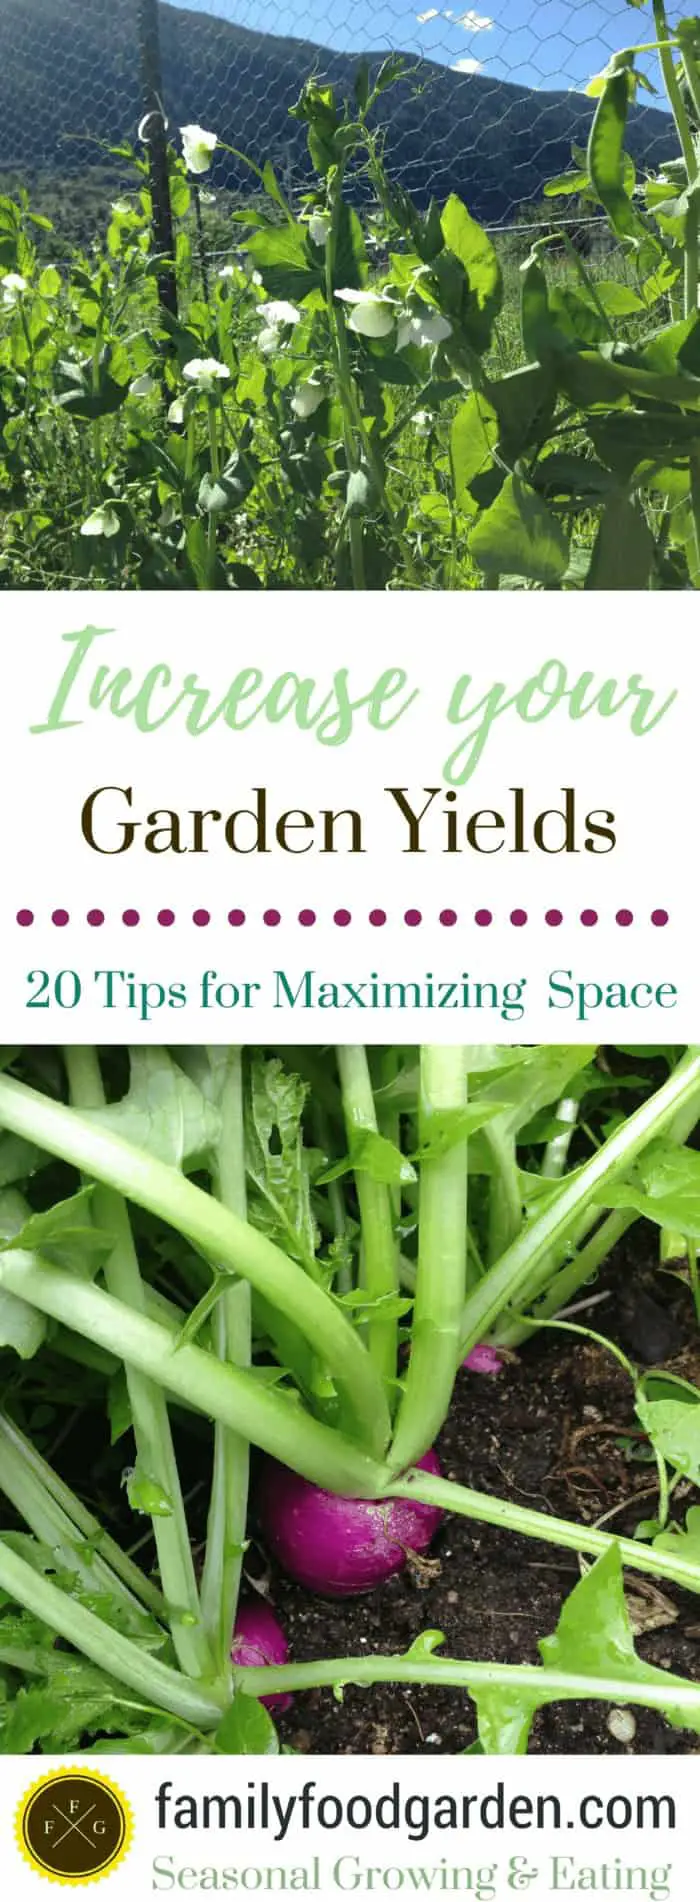 Increase your Garden Yields